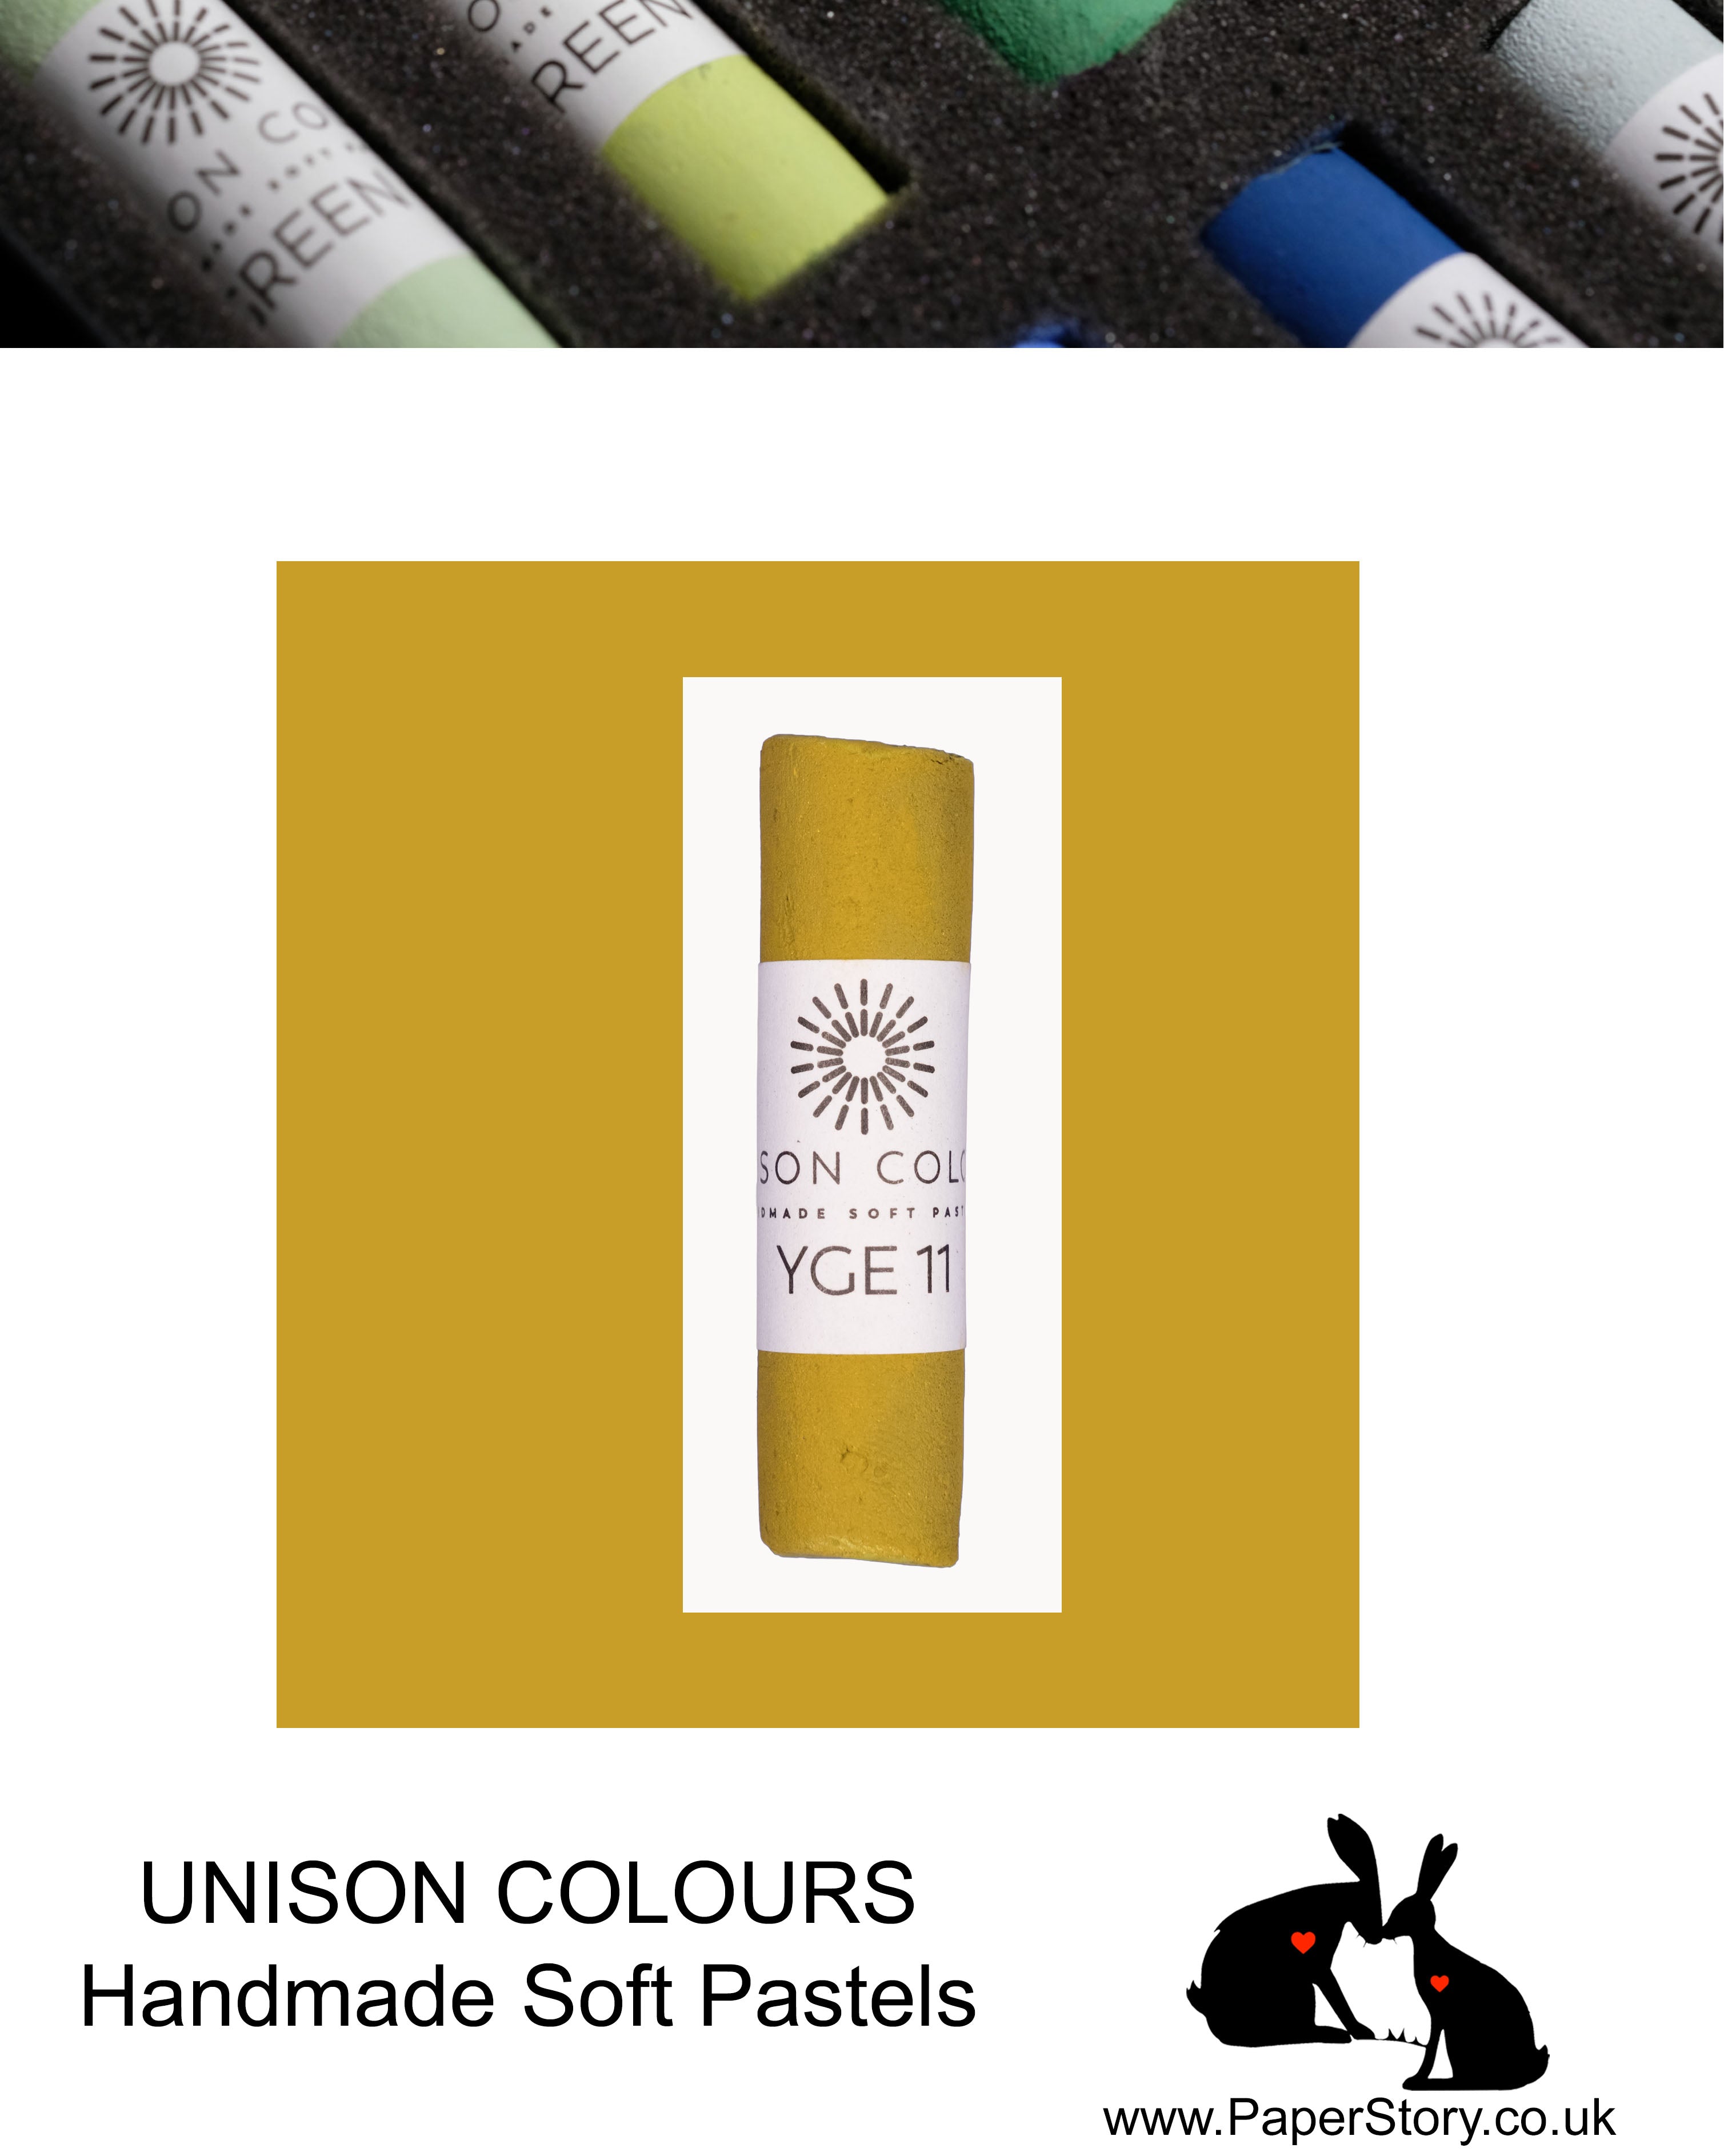 Unison Colour Handmade Soft Pastels Yellow Green Earth 11 - Size Regular